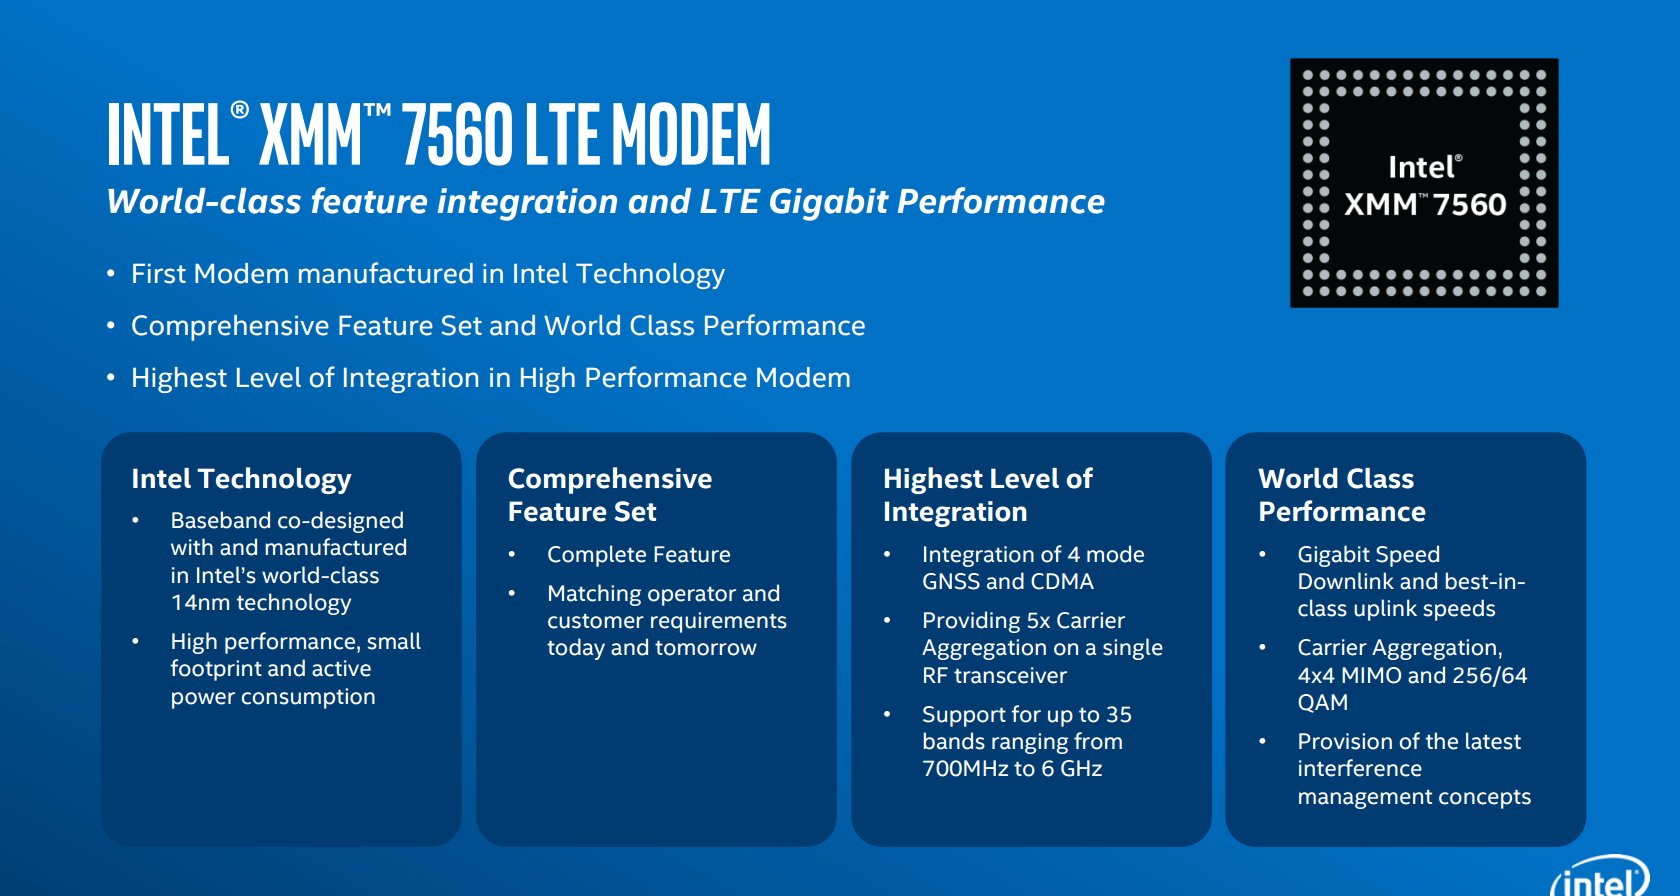 Intel XMM 7560 LTE Modem